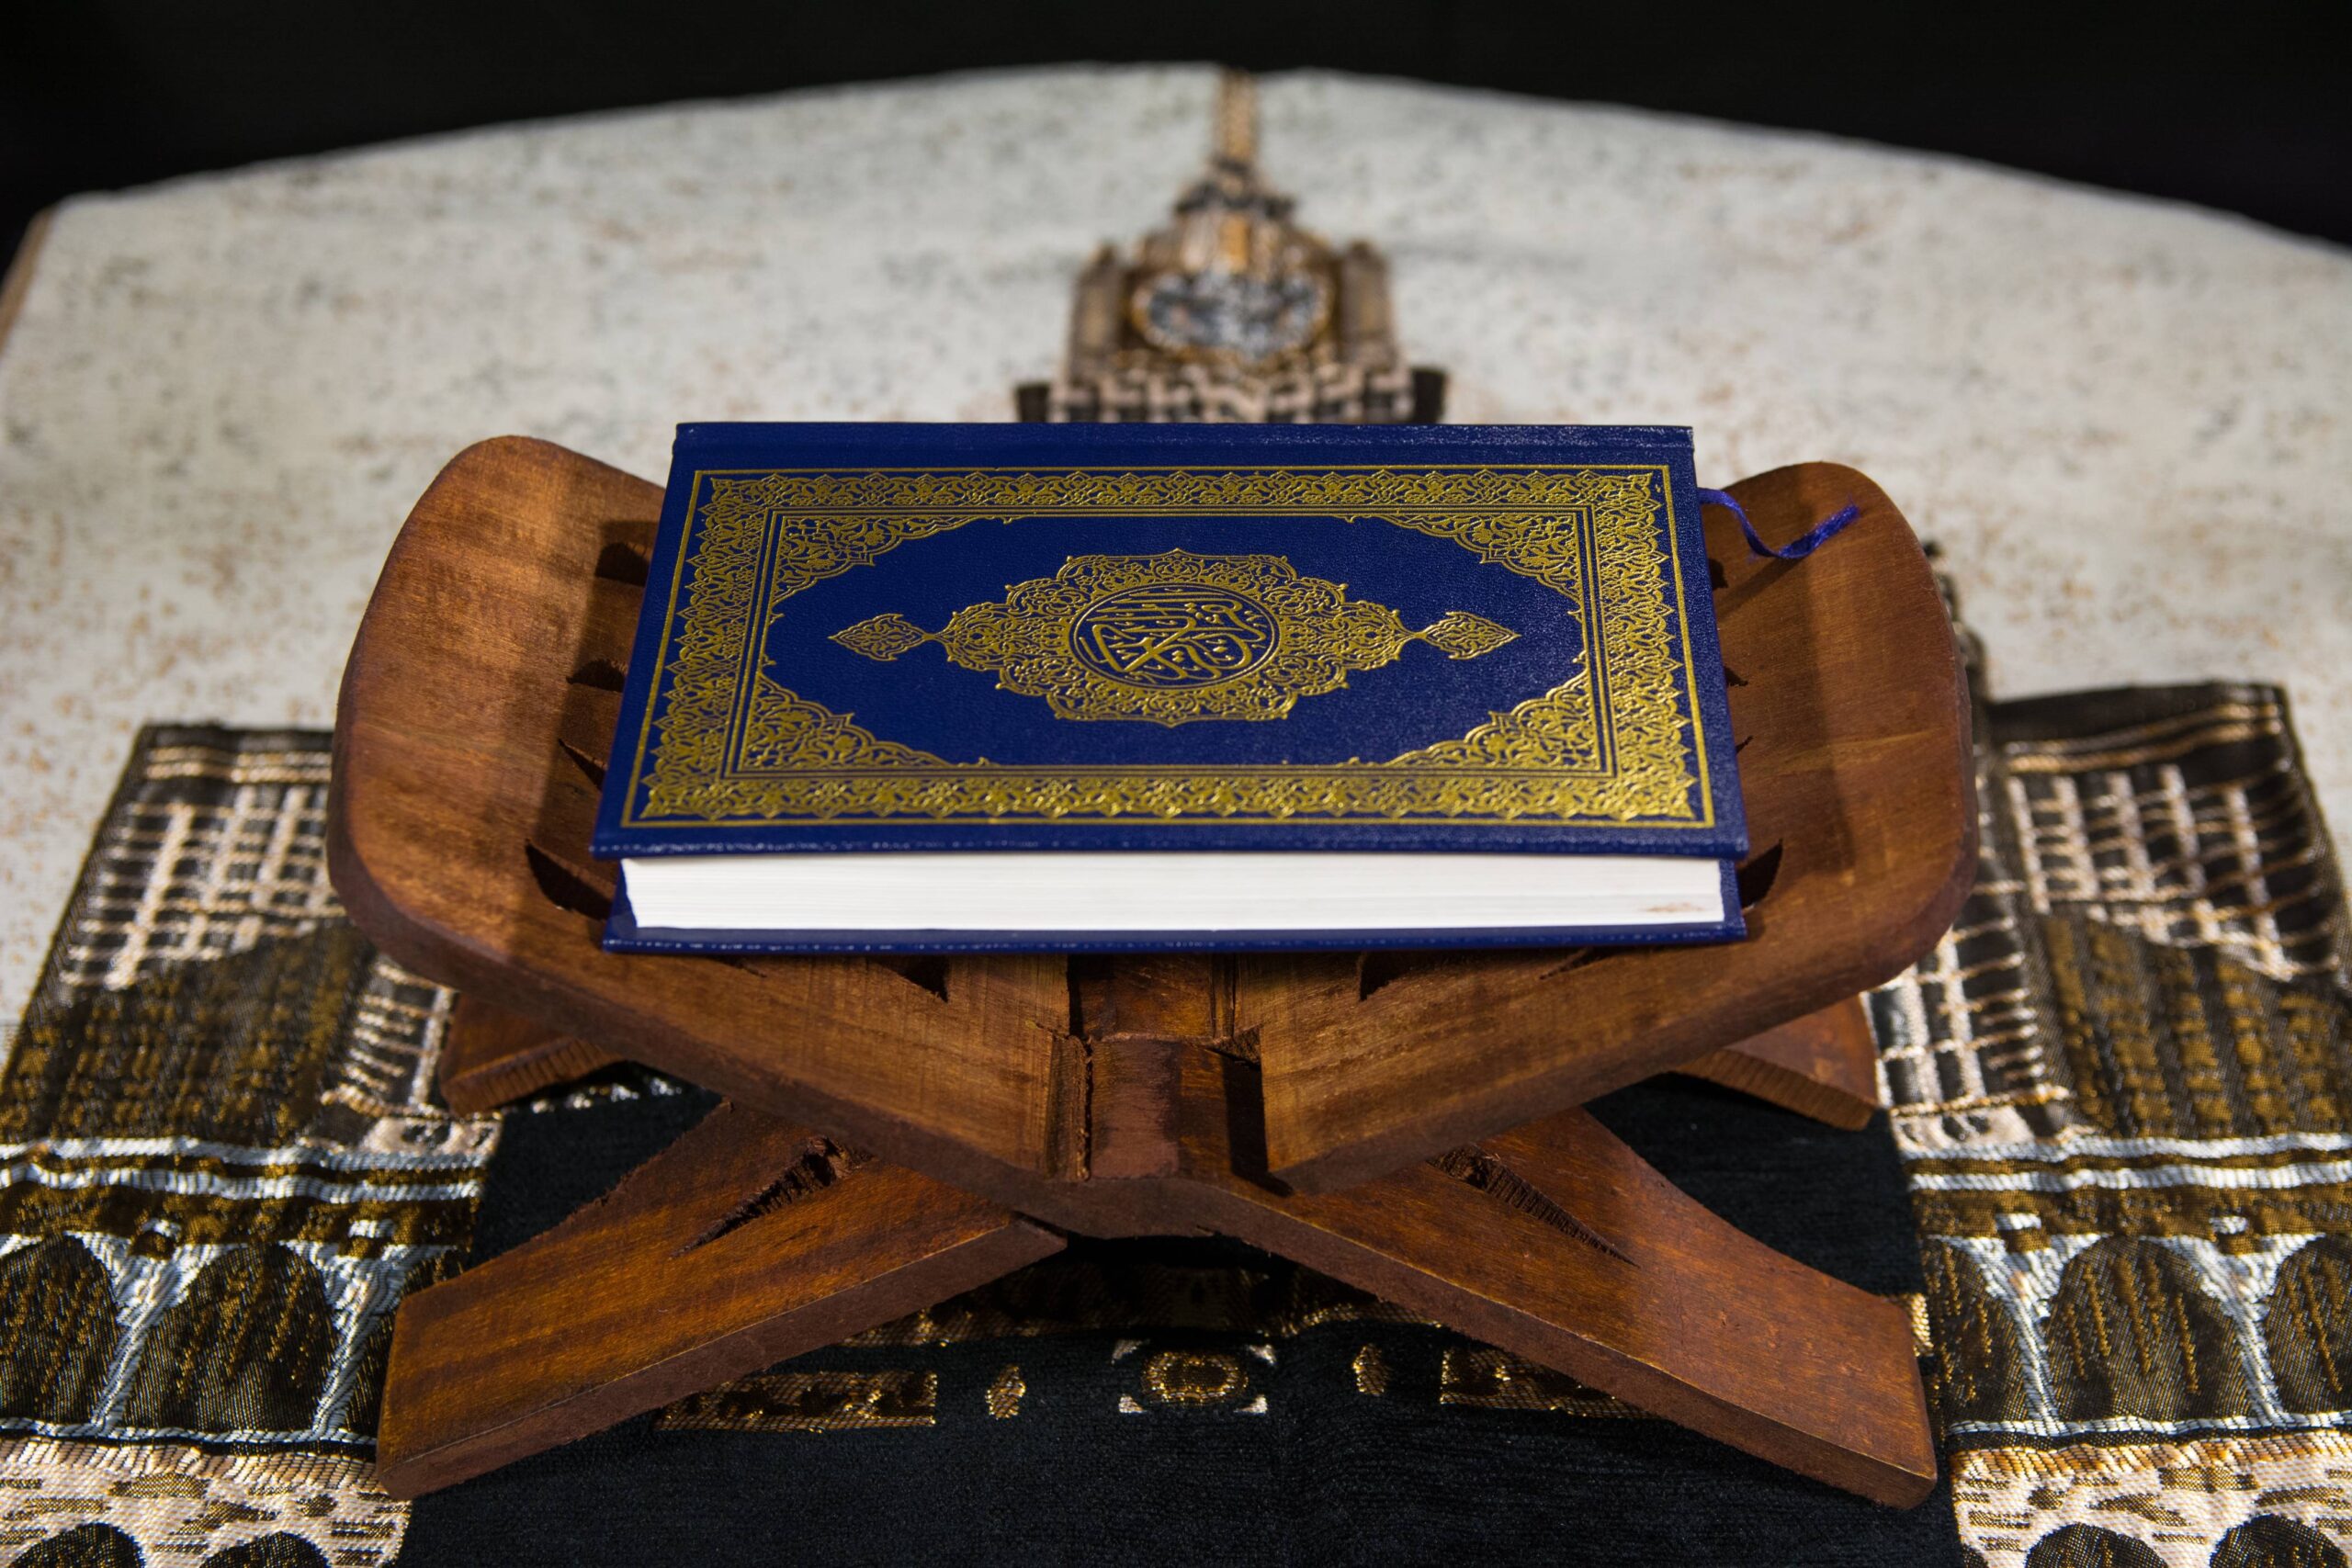 Reciting Quran with English transliteration